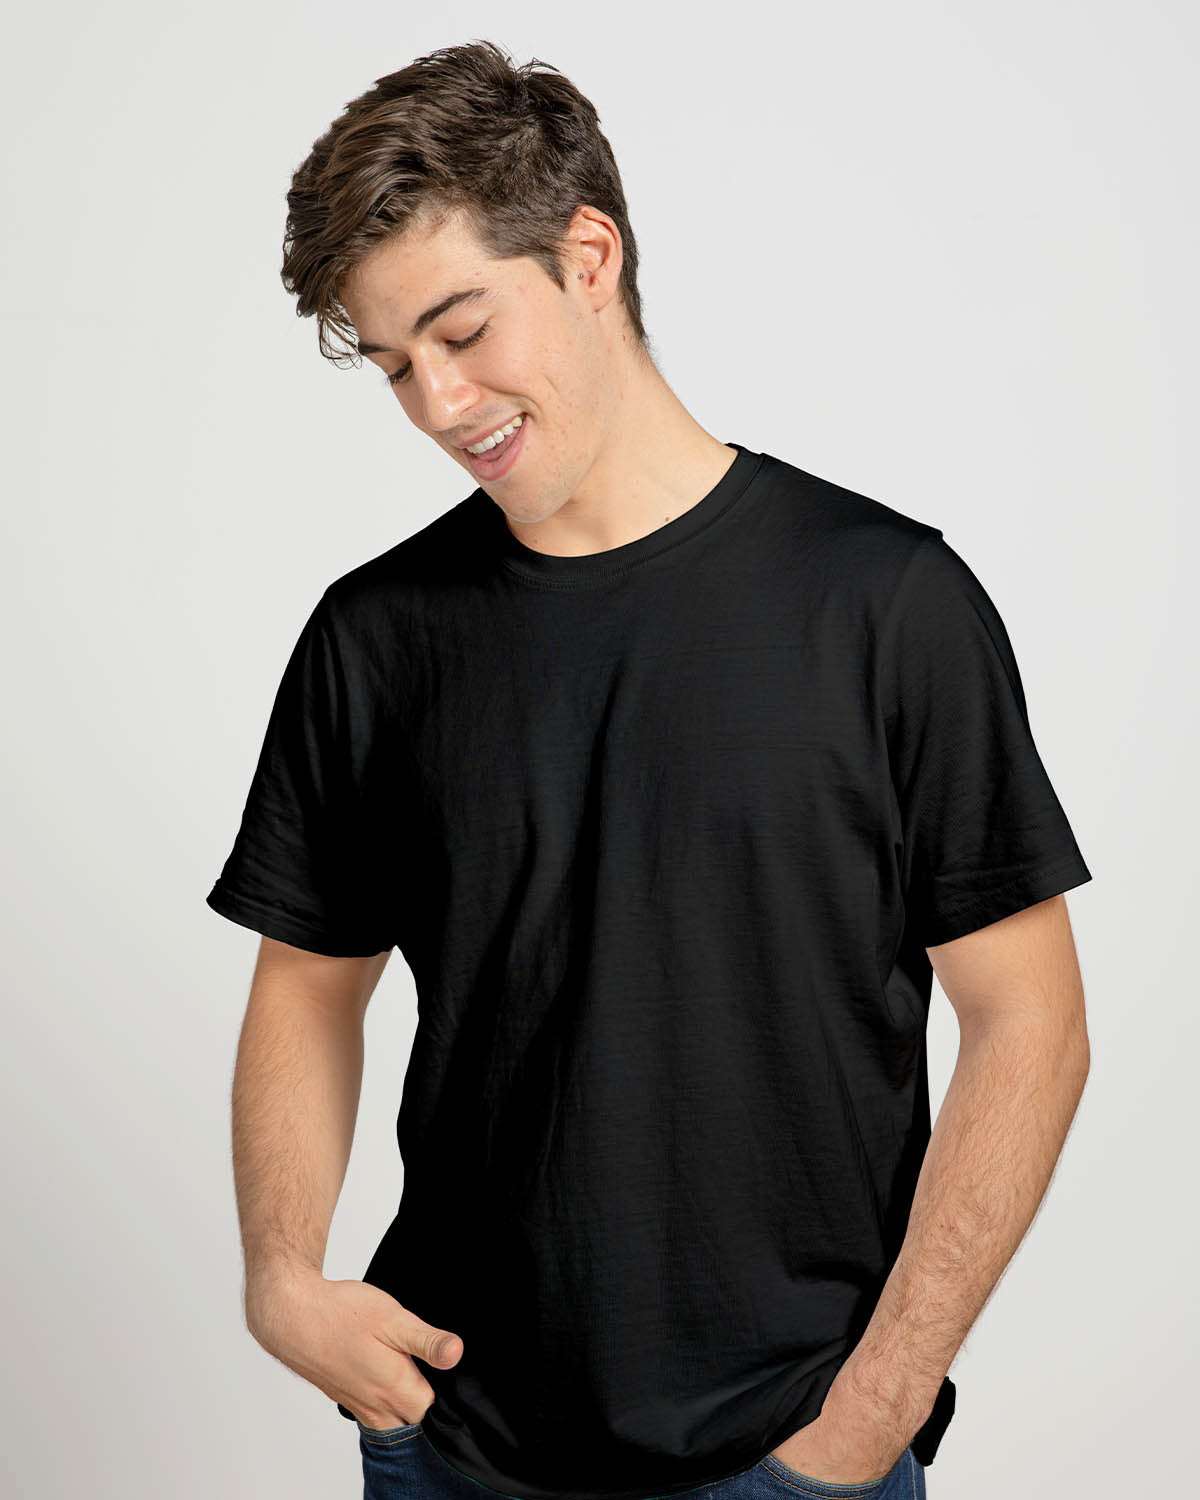 Plain Half Sleeve Black Cotton T-shirt for Men's